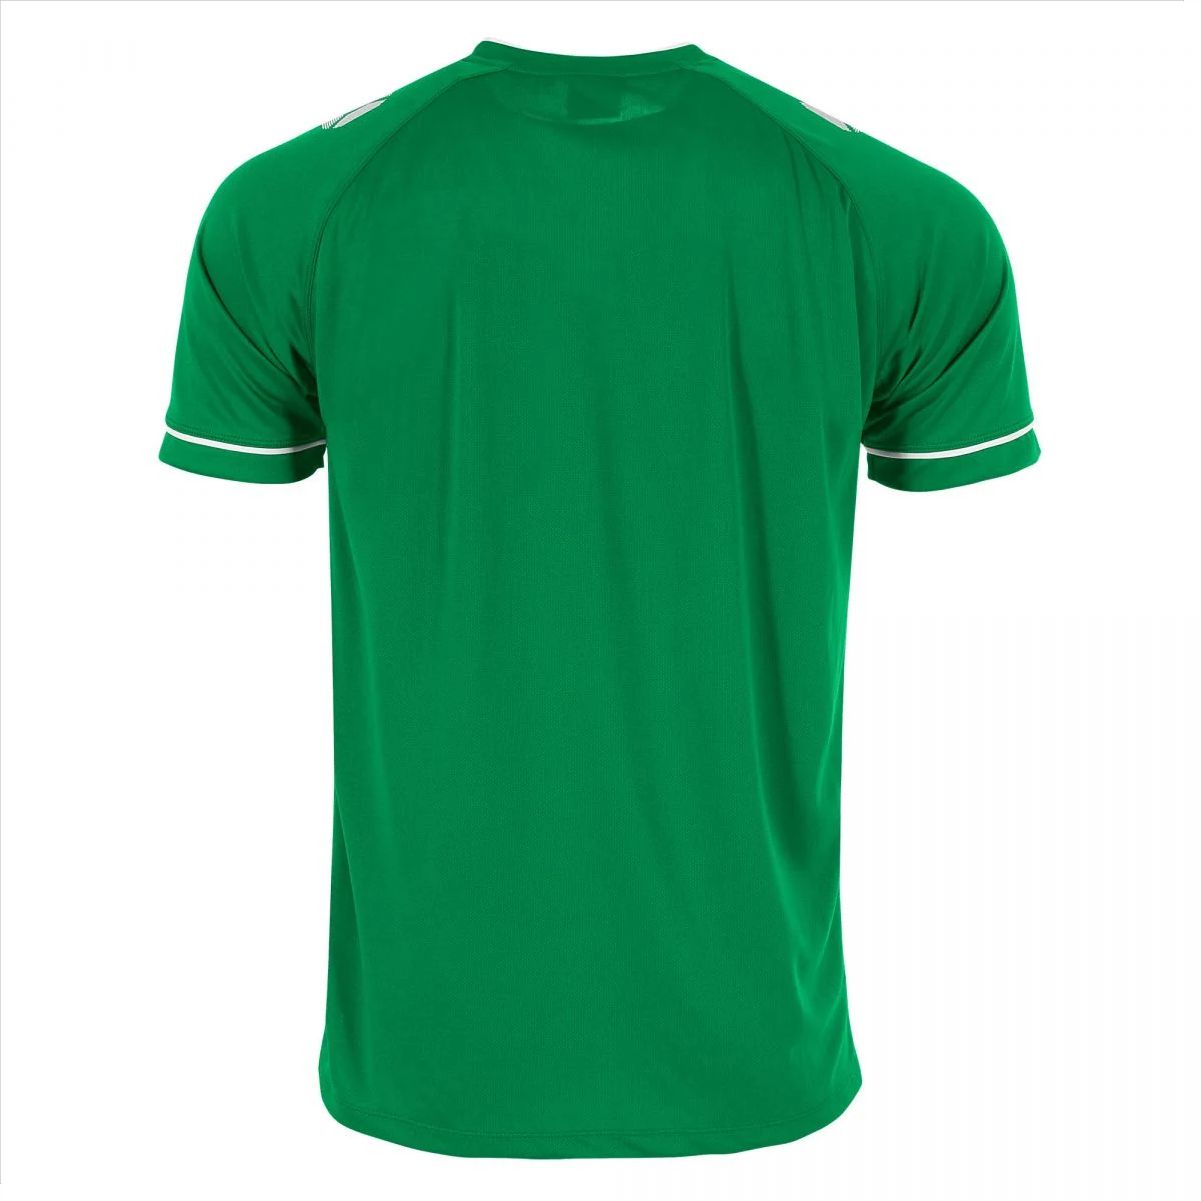 Stanno - Dash Shirt -Green & White